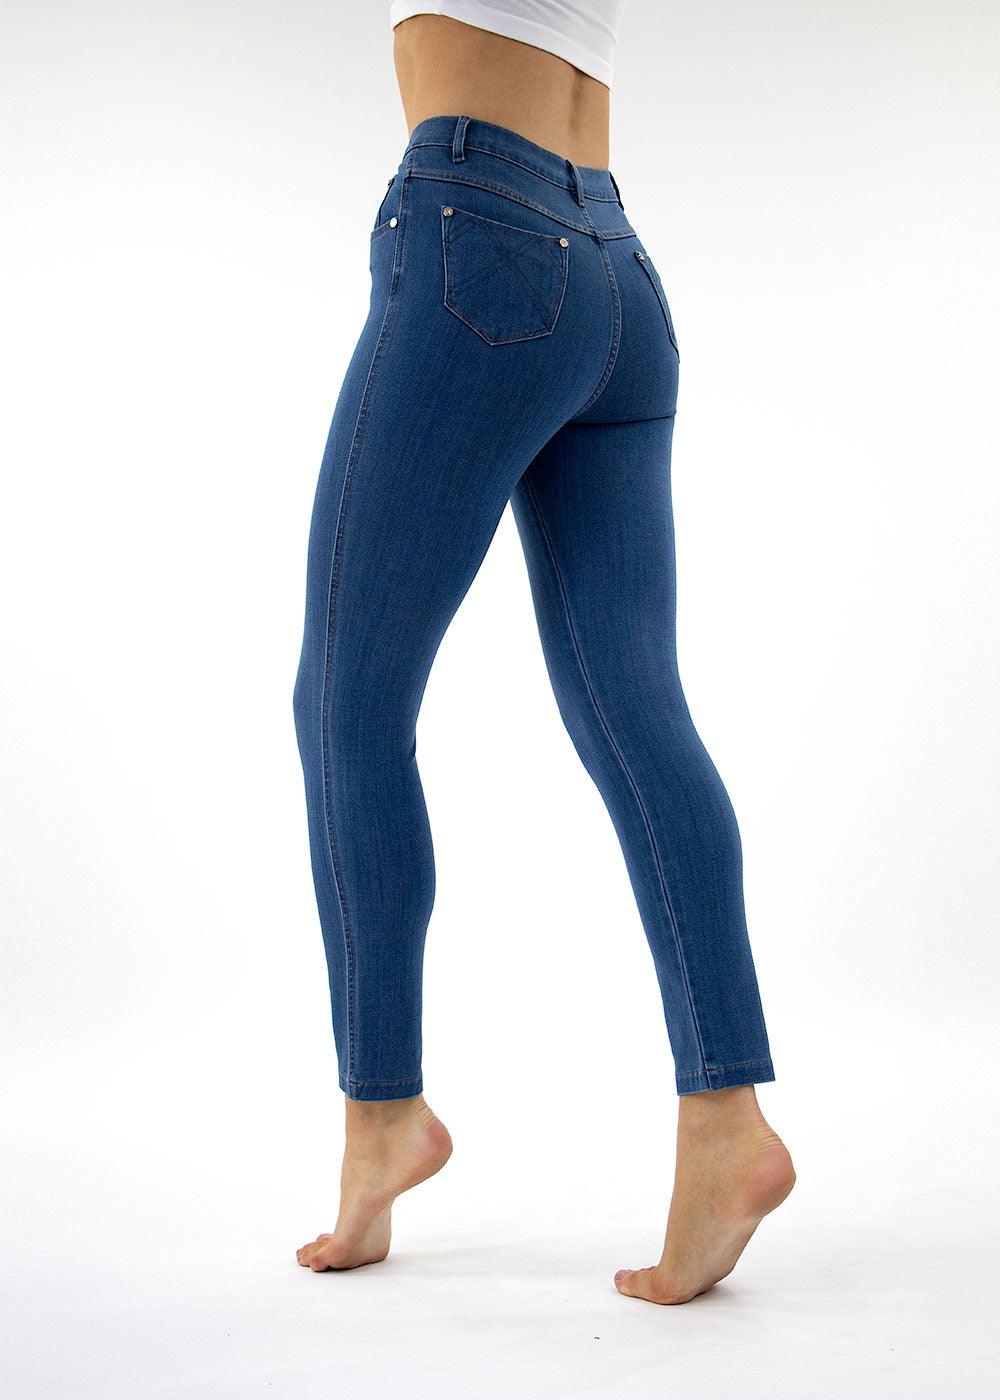 Marble Denim Jeans - Justina Clothing